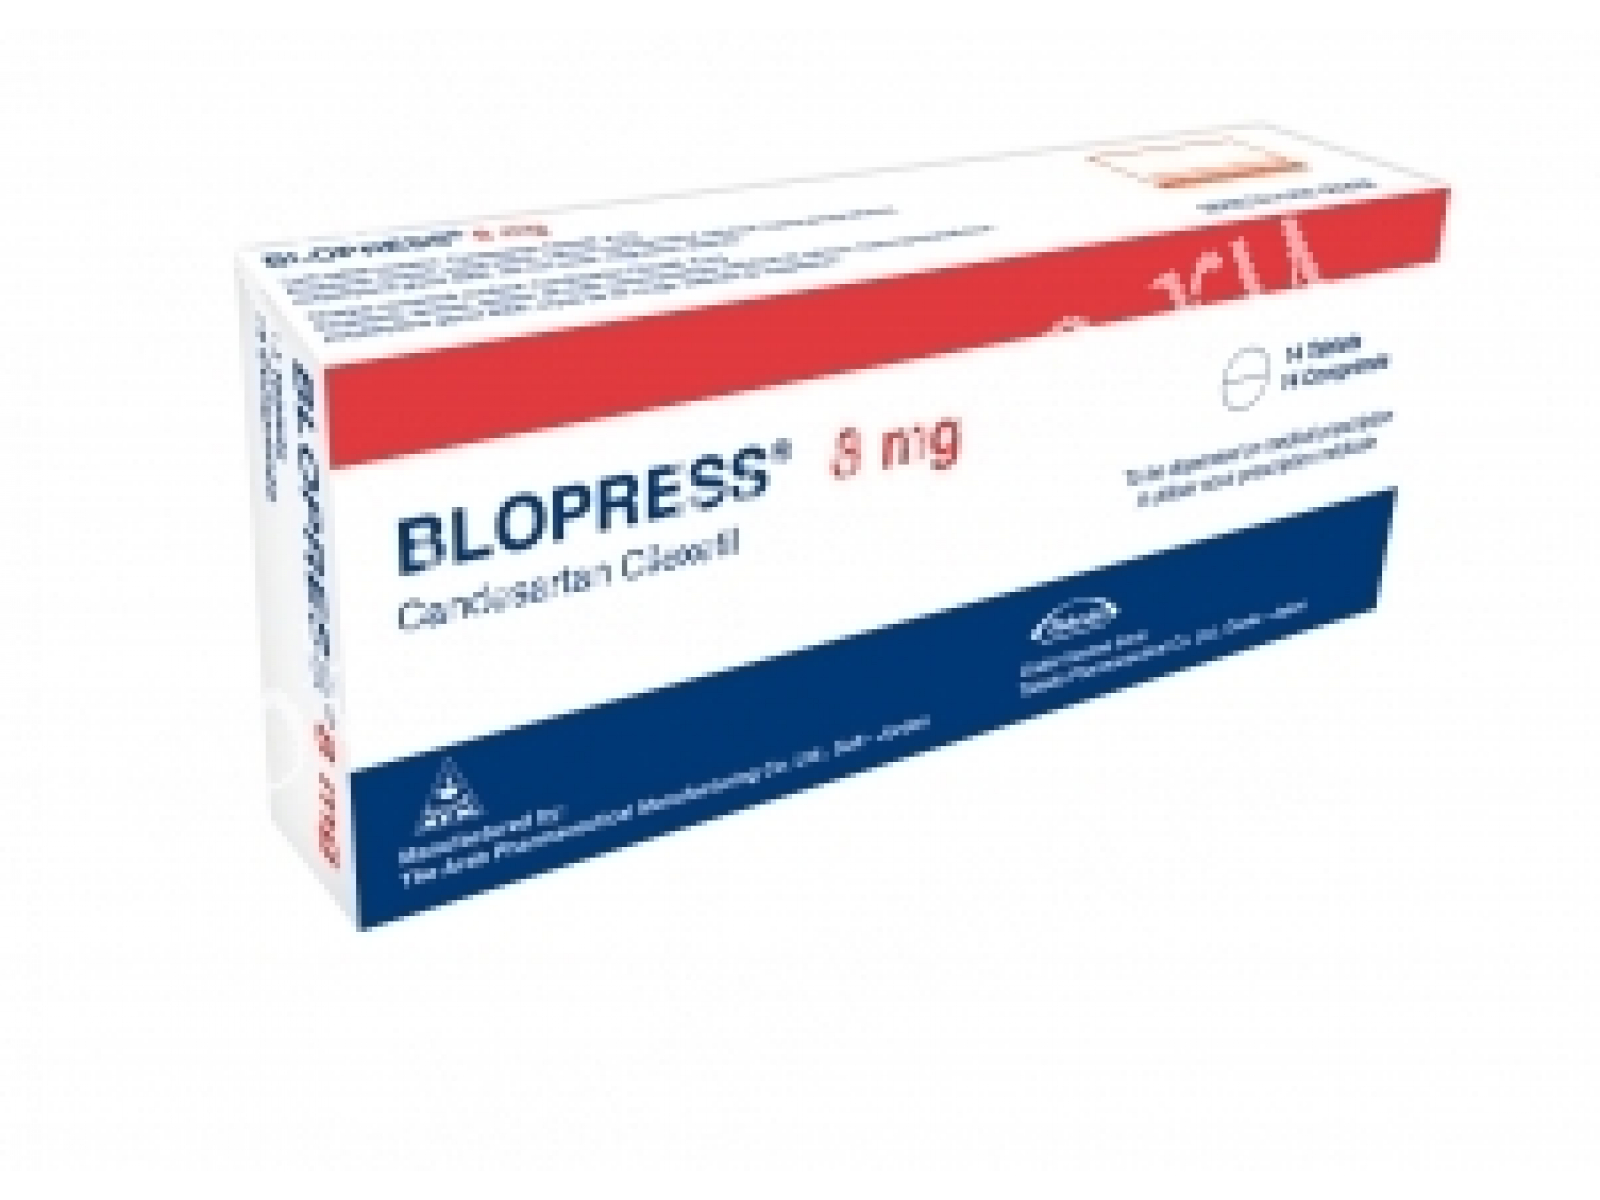 Blopress  - image 0